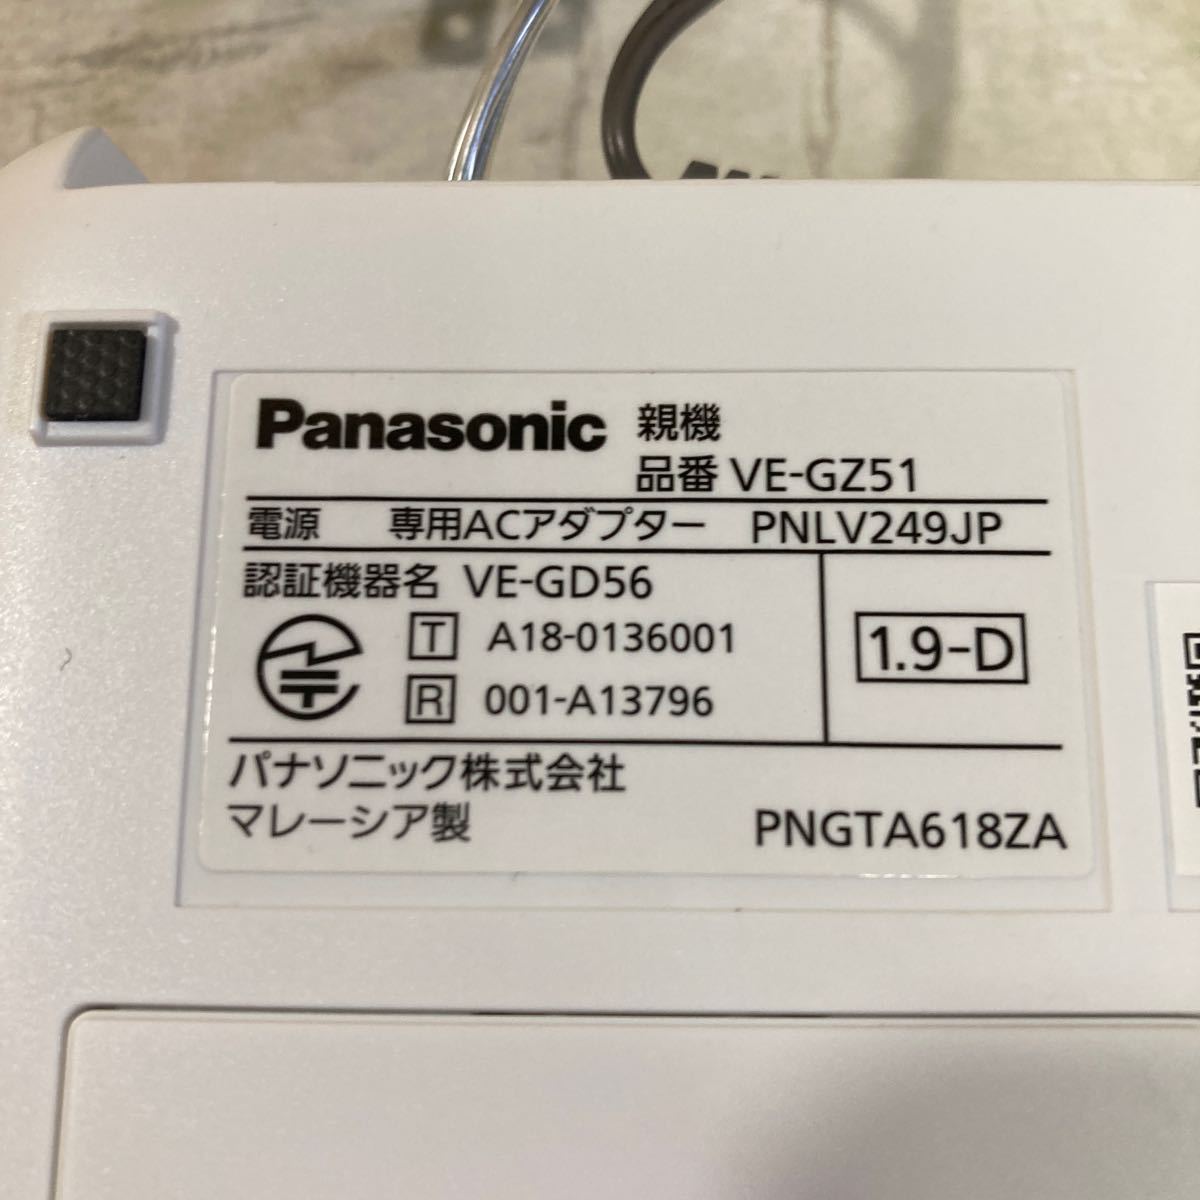  operation goods battery equipped Panasonic digital cordless telephone machine Panasonic KX-FKD558-N VE-GZ51-N pink gold cordless Sagawa Express correspondence .